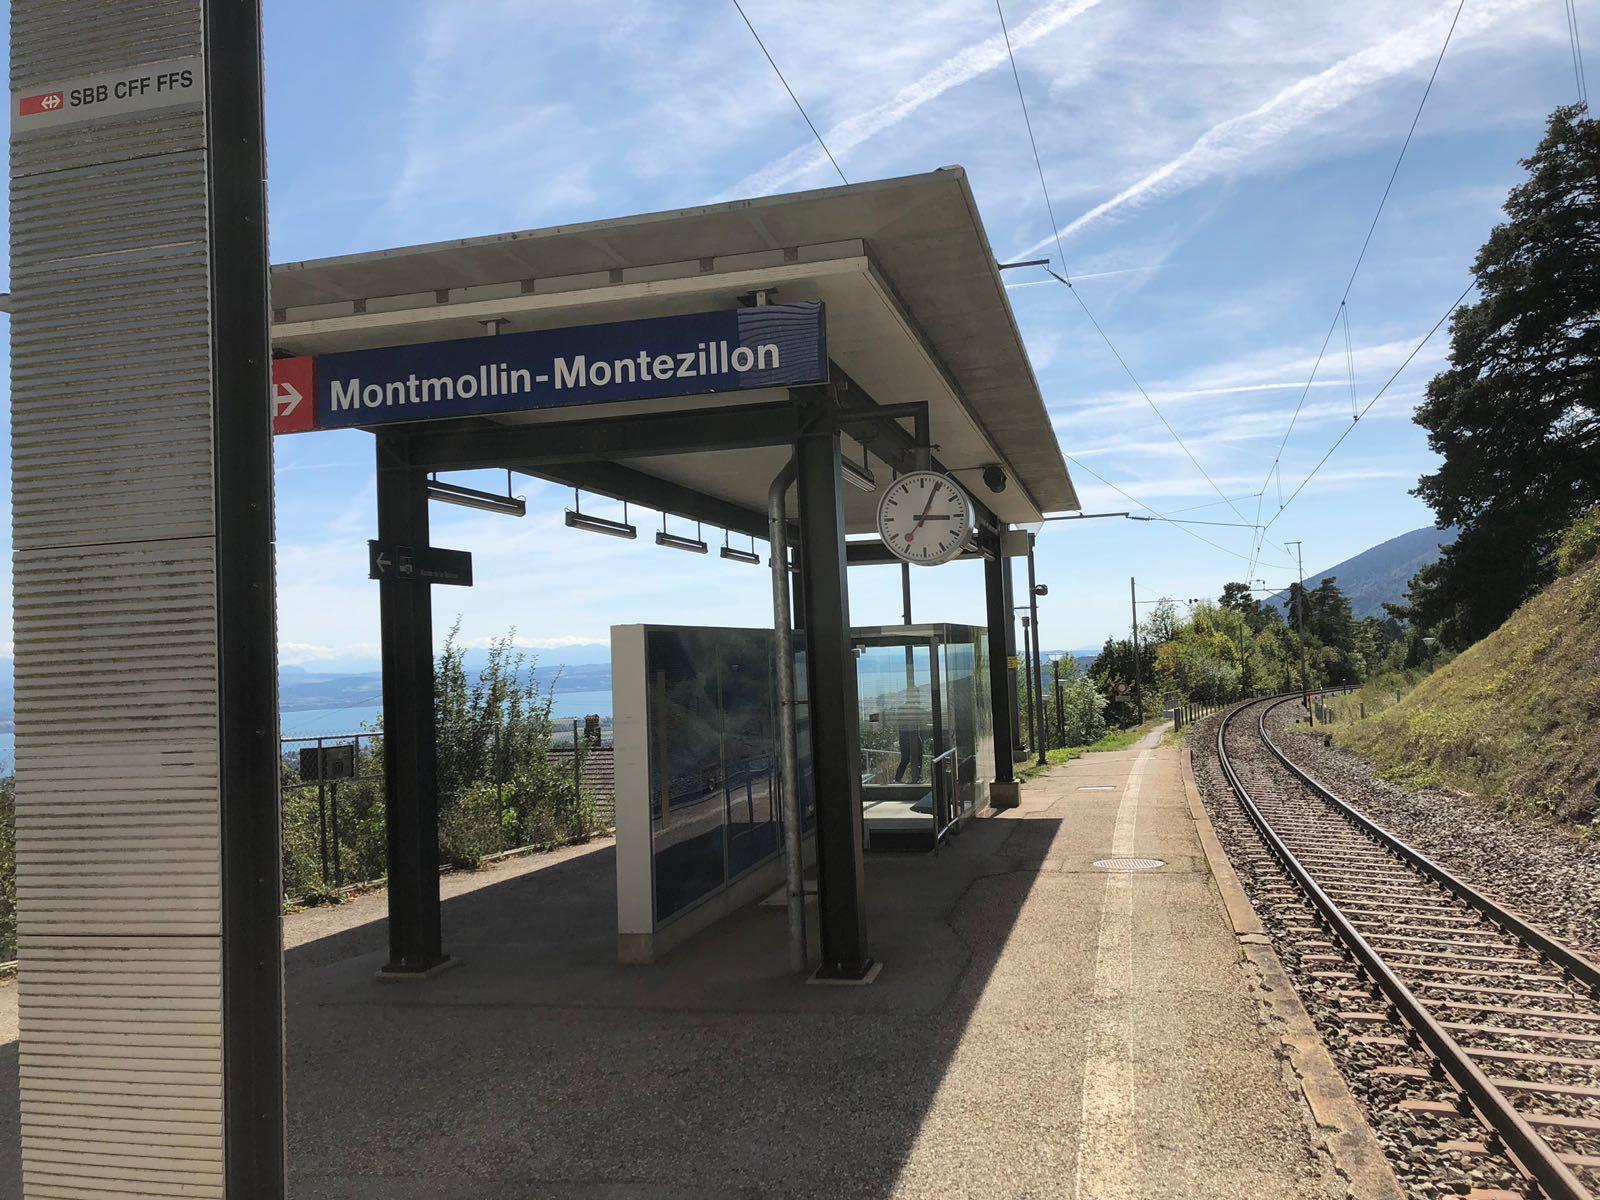 Montmollin station